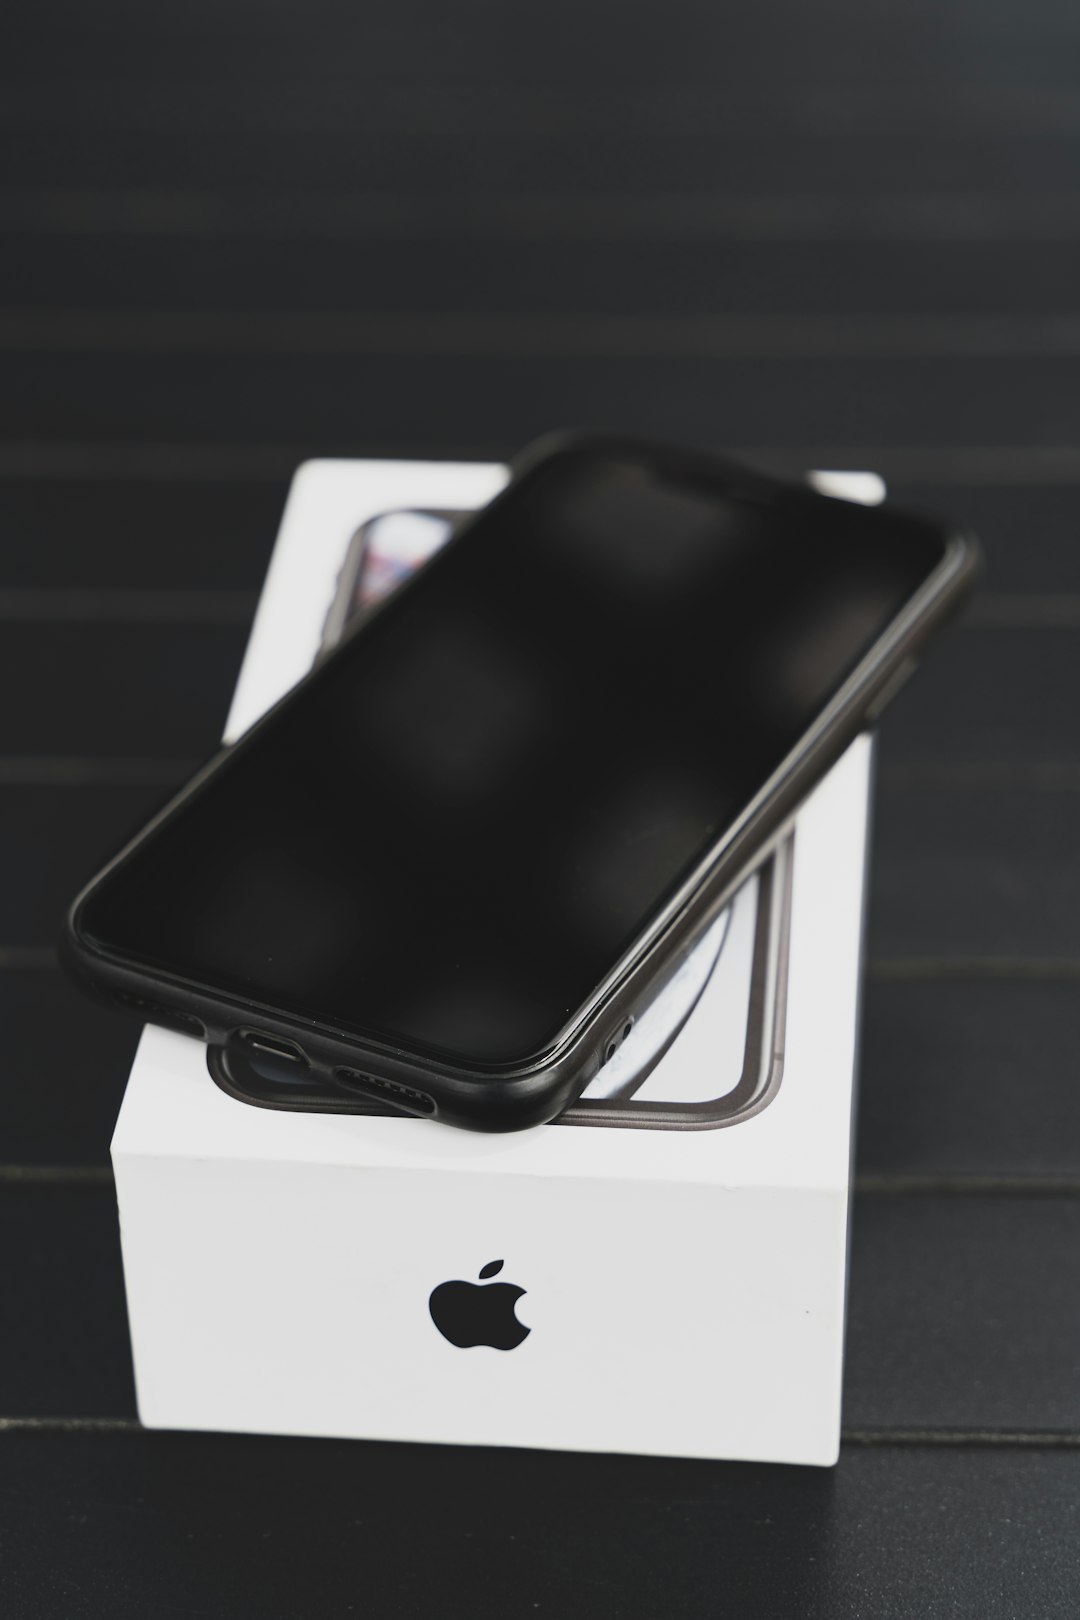 black iphone 7 on white box